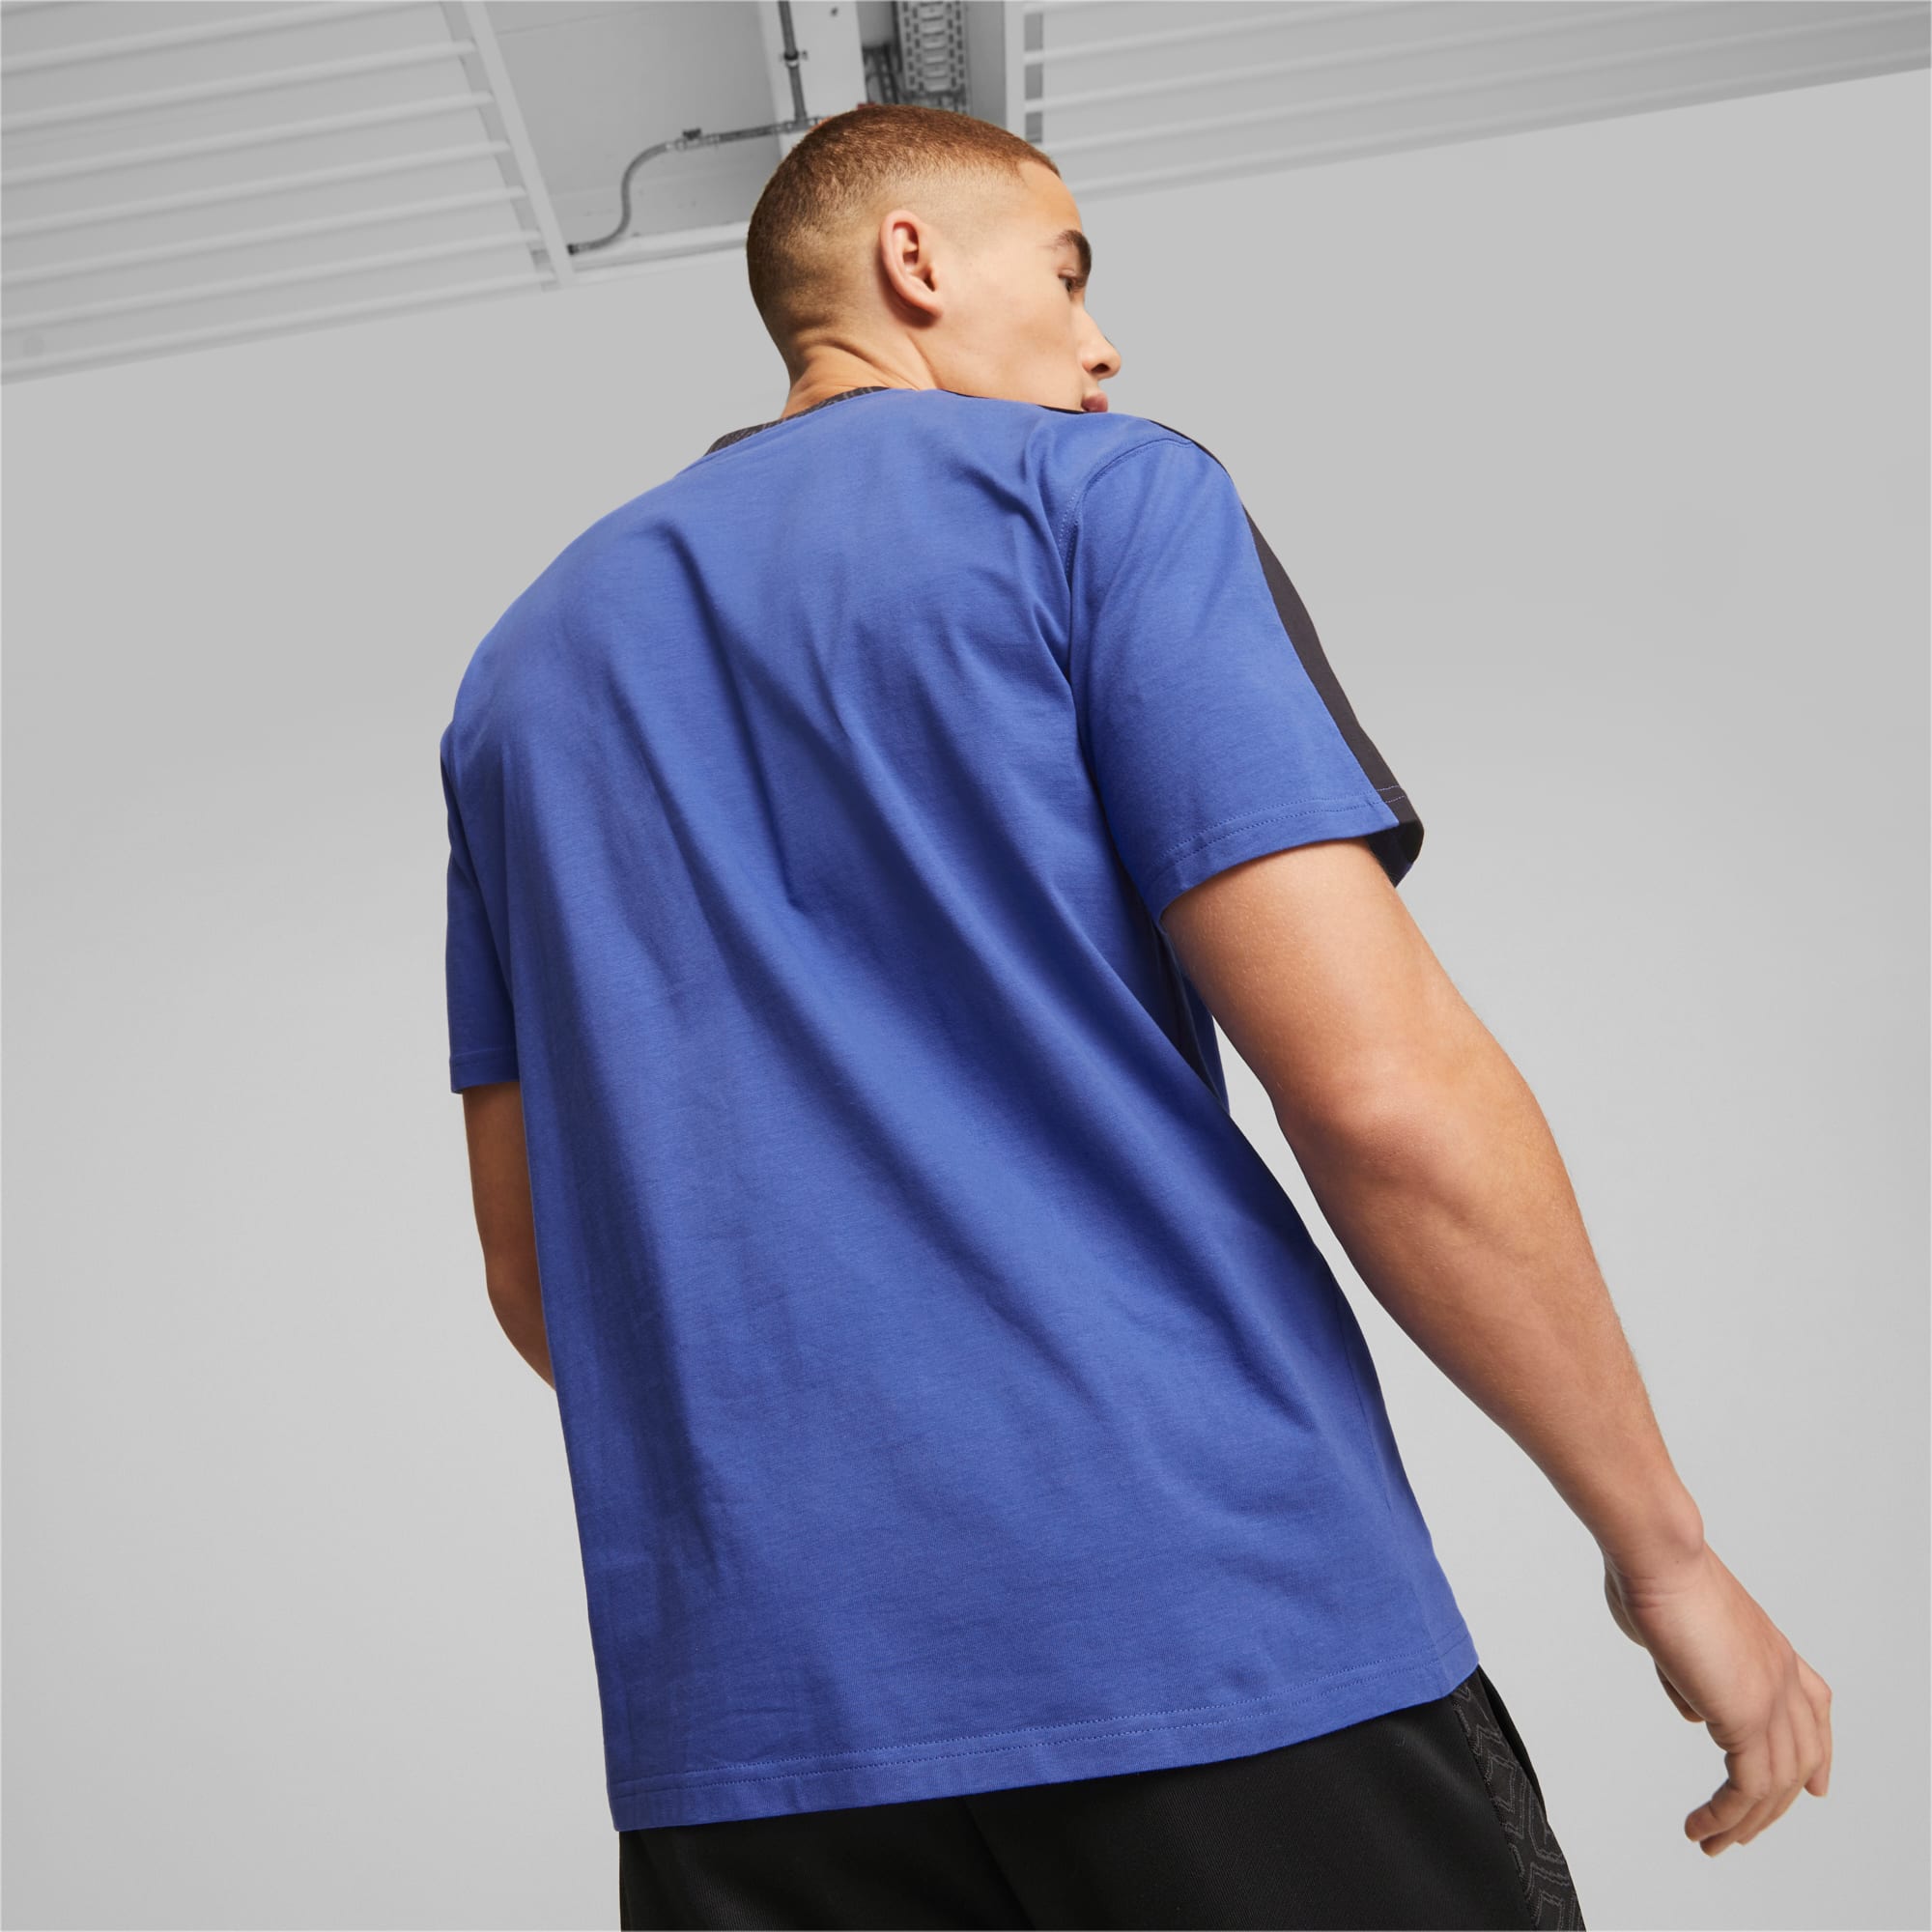 PUMA T7 Trend 7Etter T-Shirt Men, Royal Blue, Size XS, Clothing